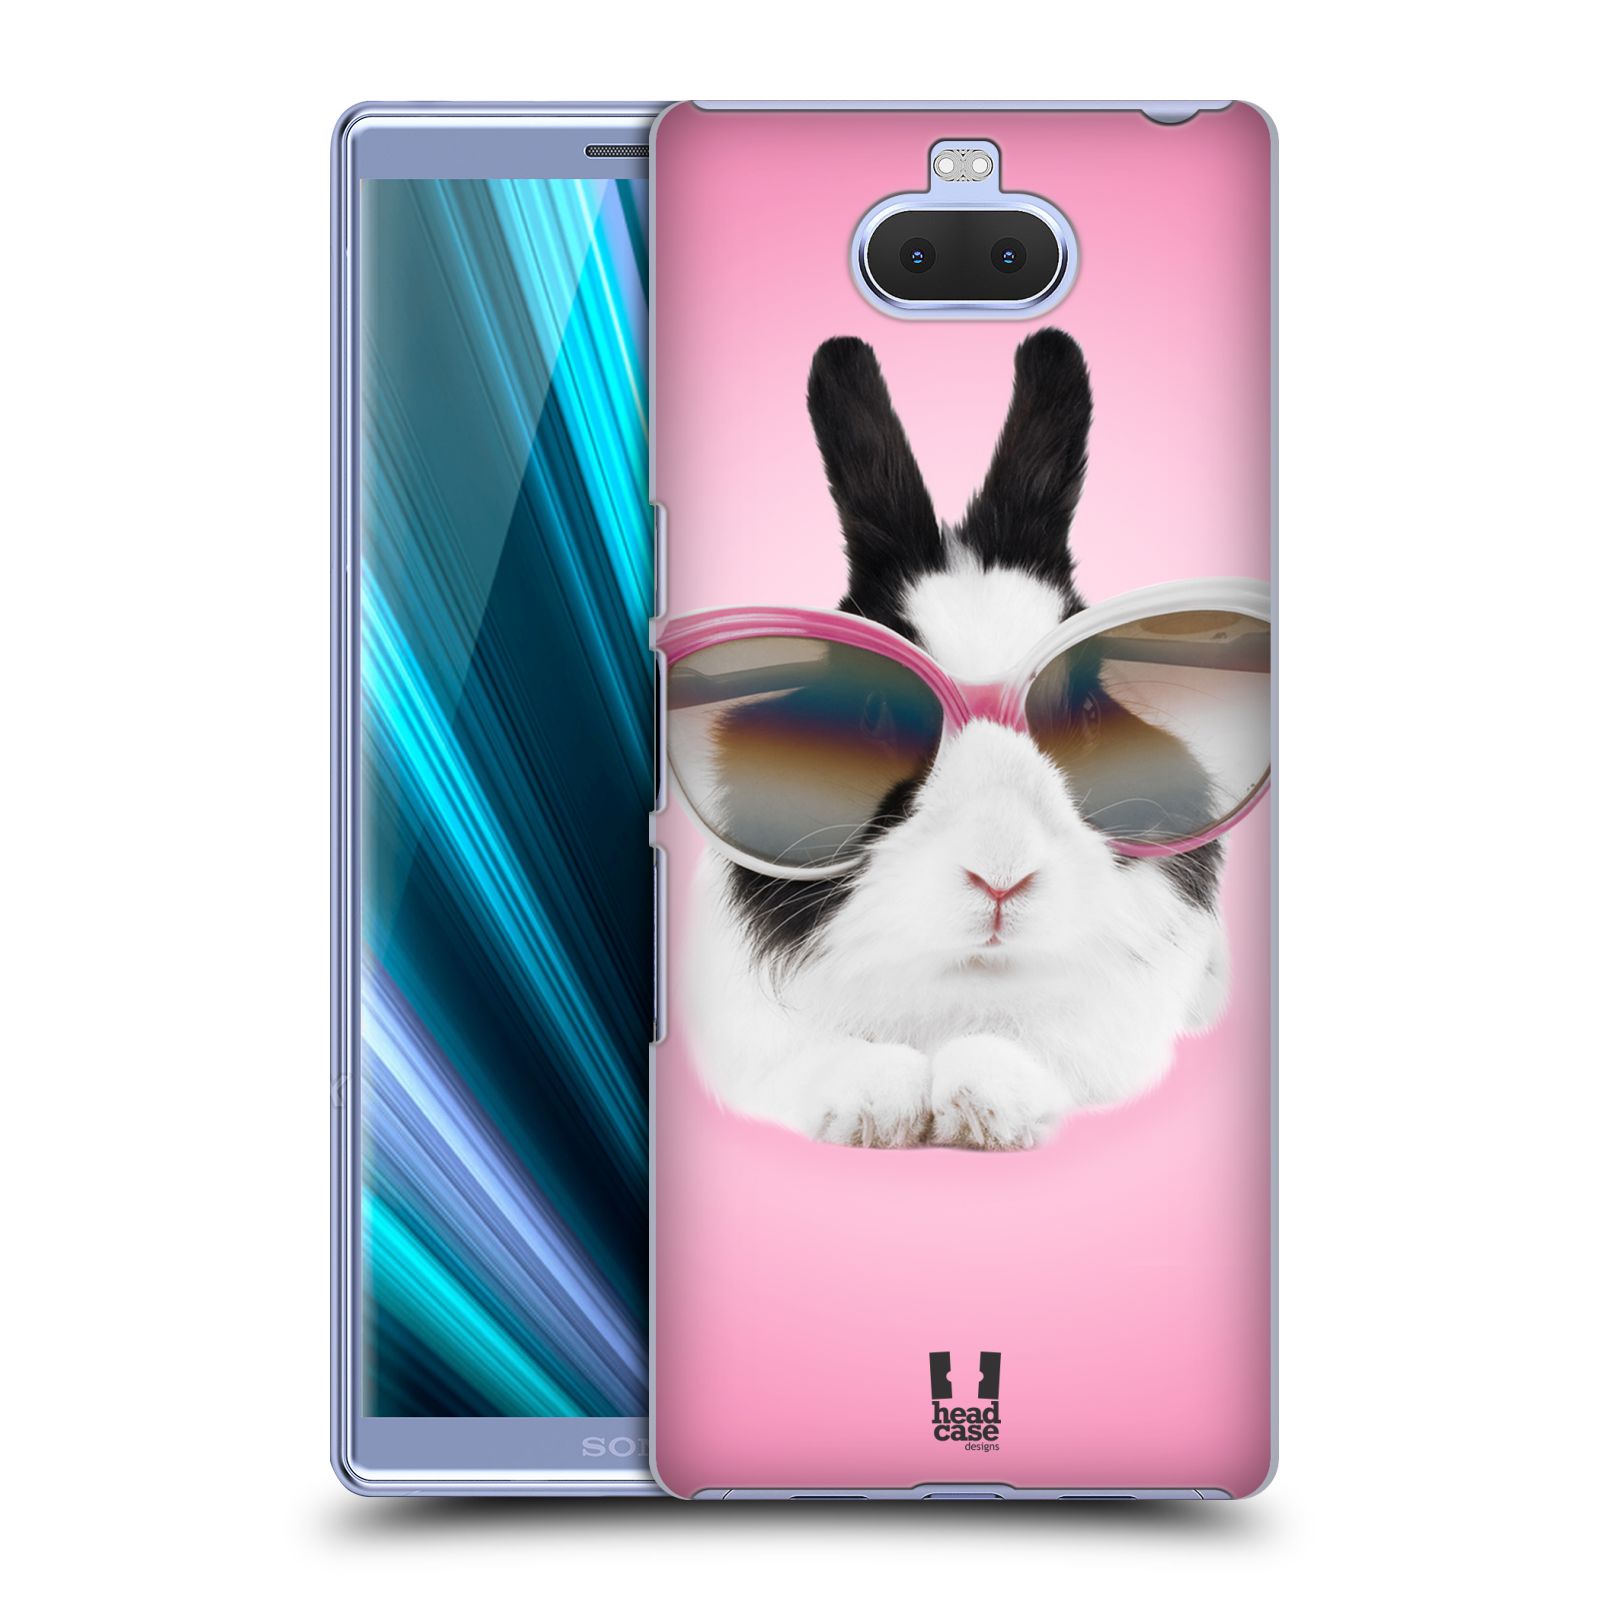 Pouzdro na mobil Sony Xperia 10 - Head Case - vzor Legrační zvířátka roztomilý králíček s brýlemi růžová